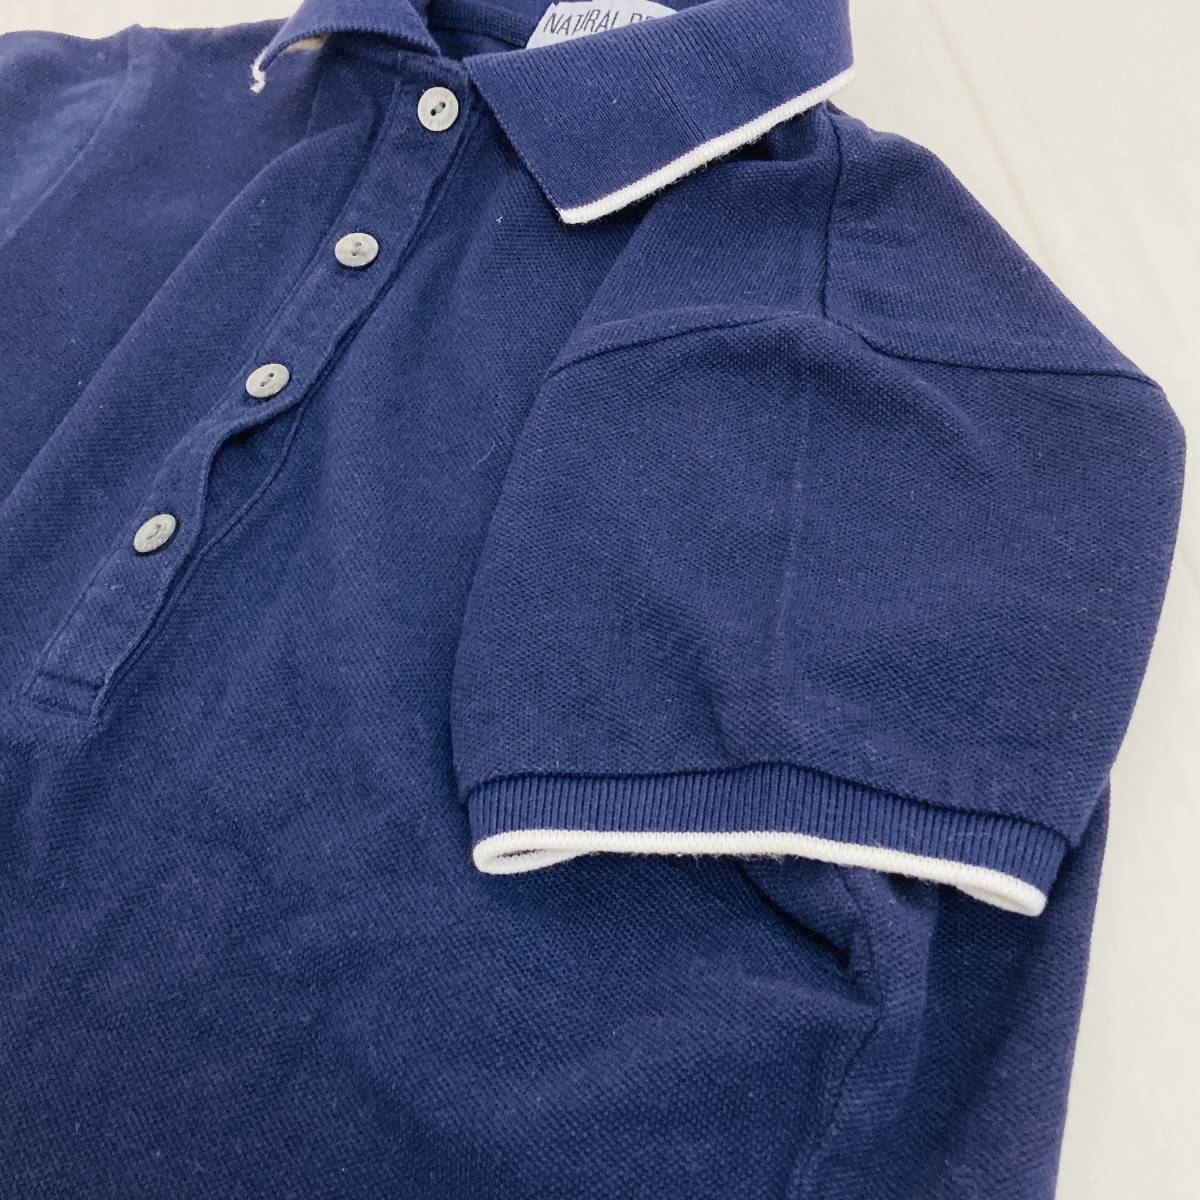 a01991 美品 NATURAL BEAUTY BASIC ナチュラルビューティーベーシック ポロシャツ 半袖 M 紺 綿100% 万能 ベーシックカジュアルスタイル_画像5